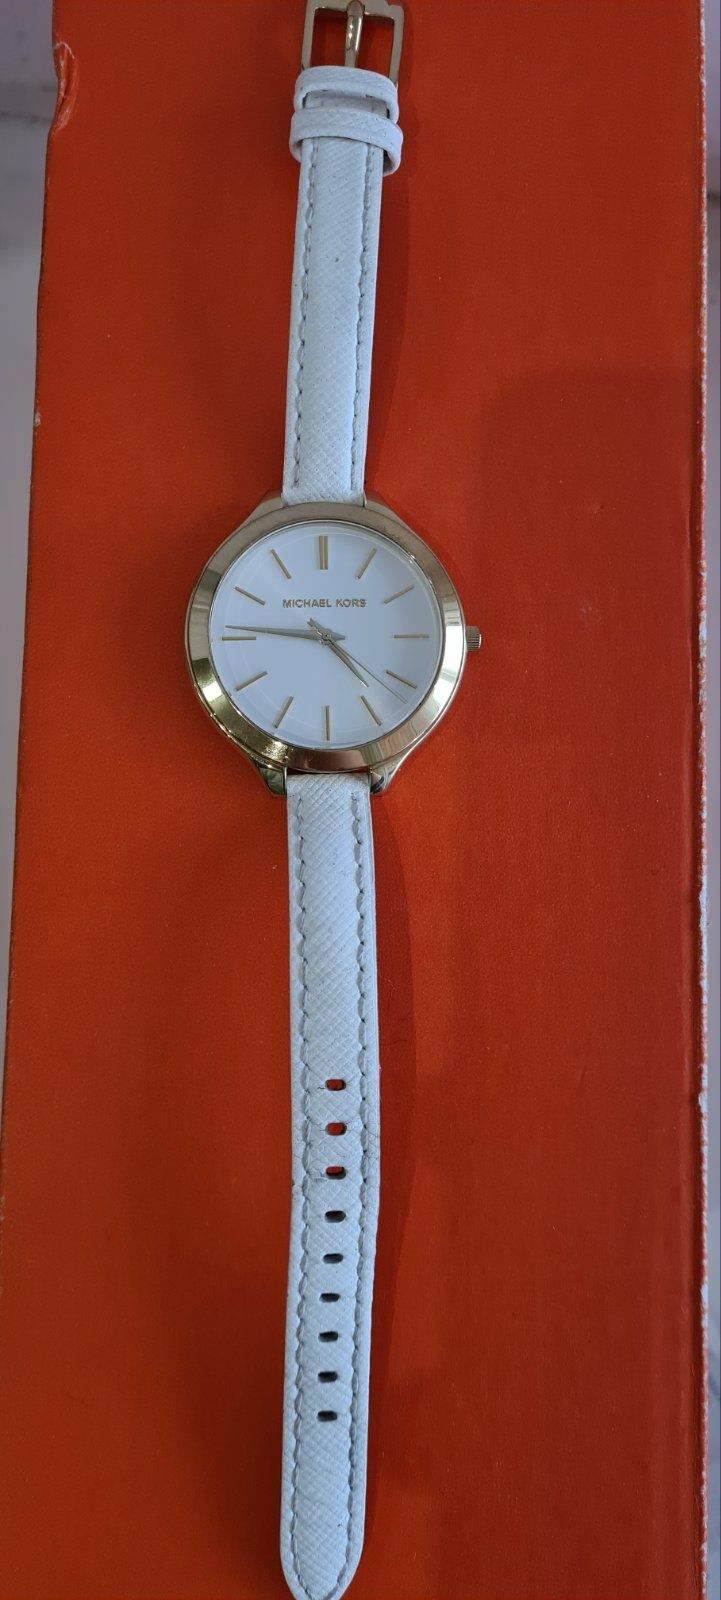 Жіночий годинник Michael Kors MK-2273